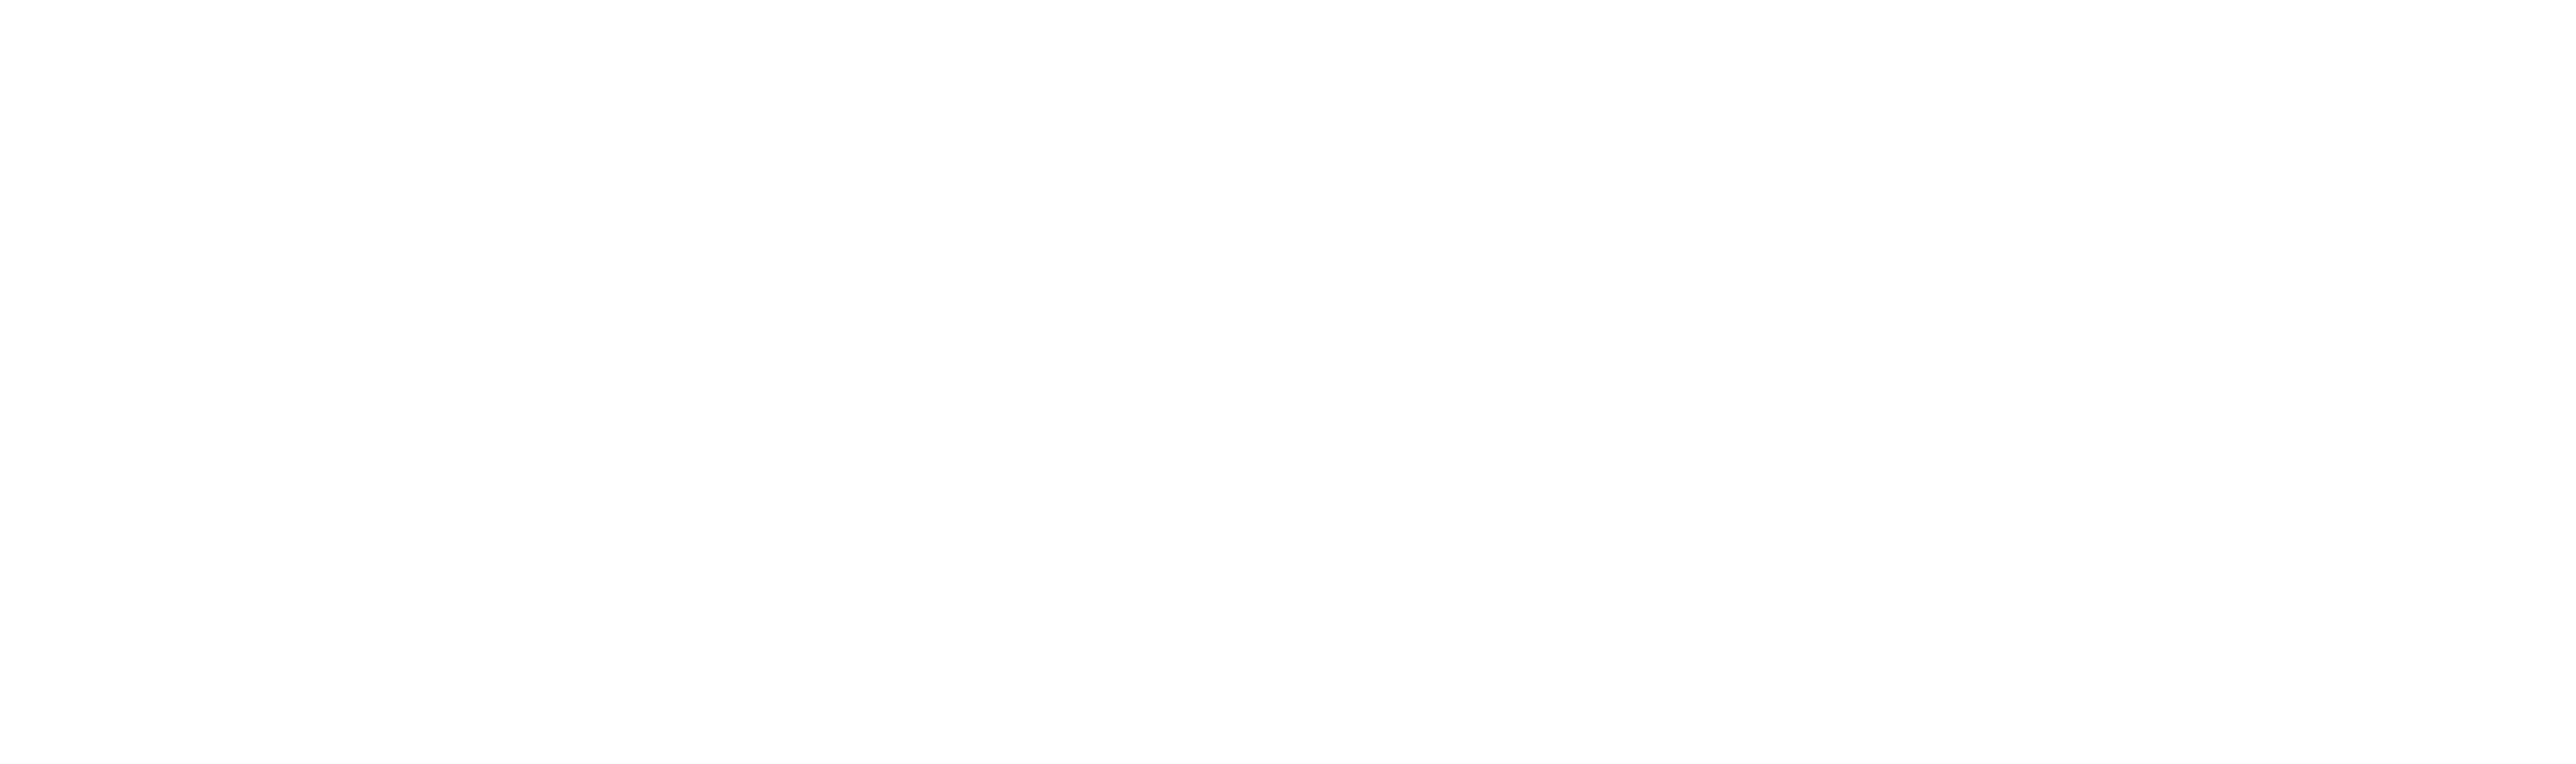 Academia Bracol Branco